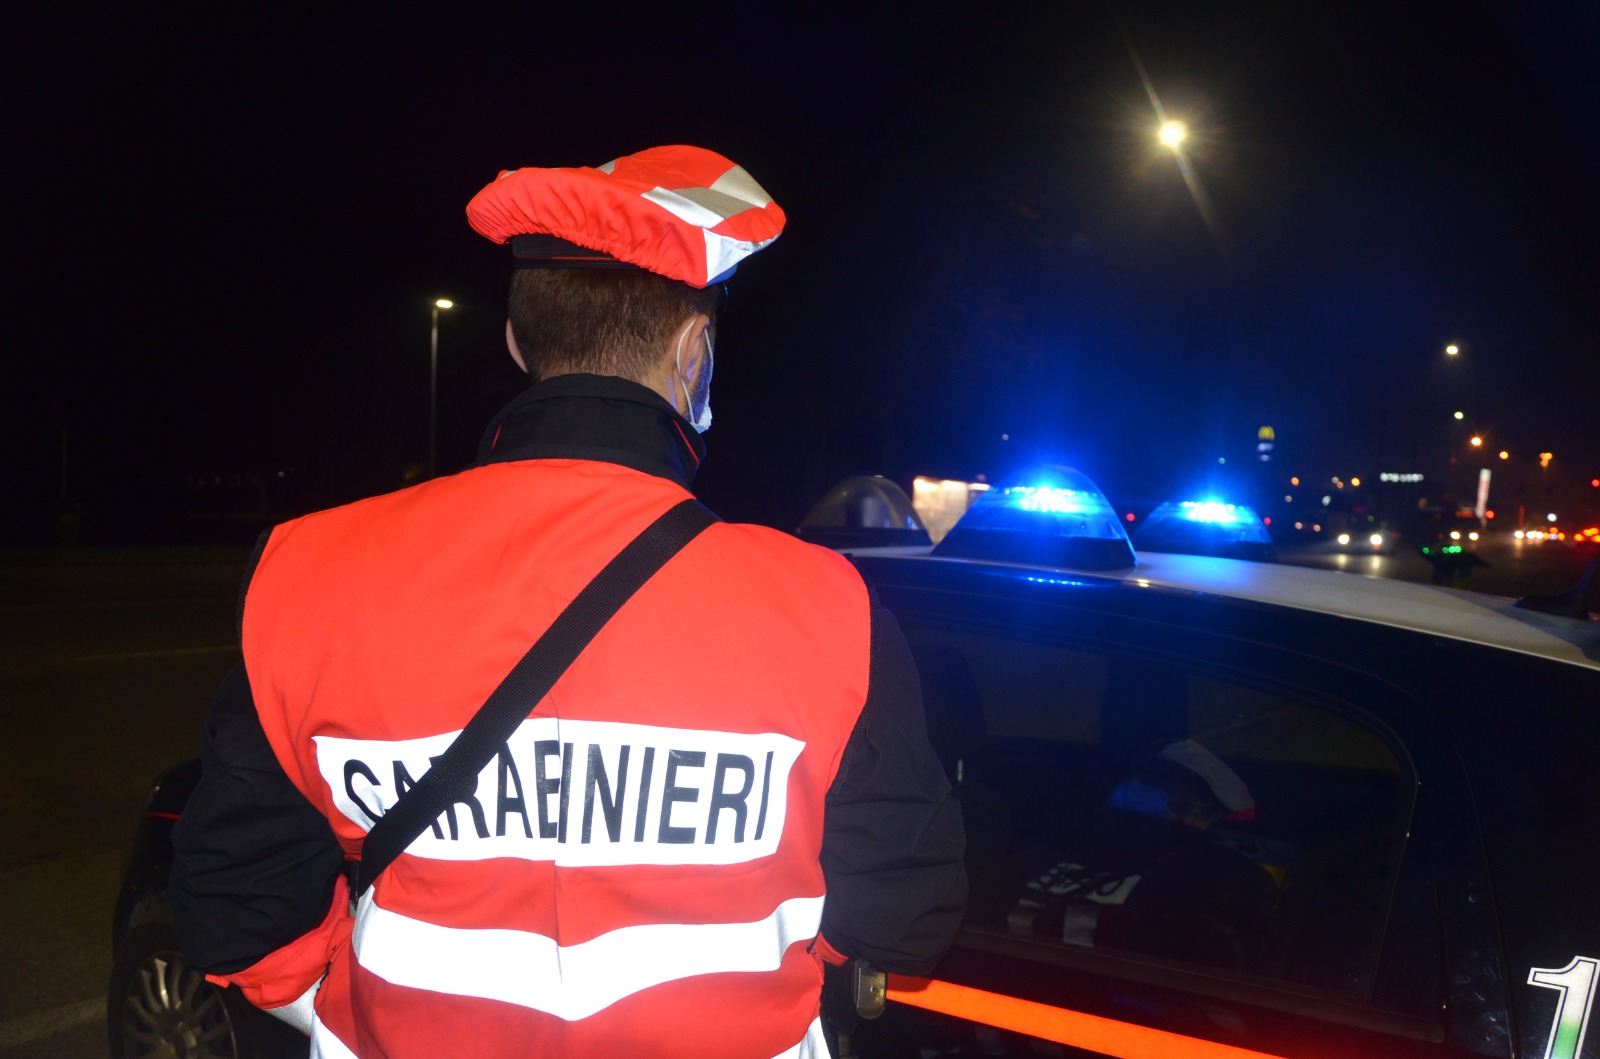  Cosa succede a Castelfranco? Risse e furti, 6 arrestati